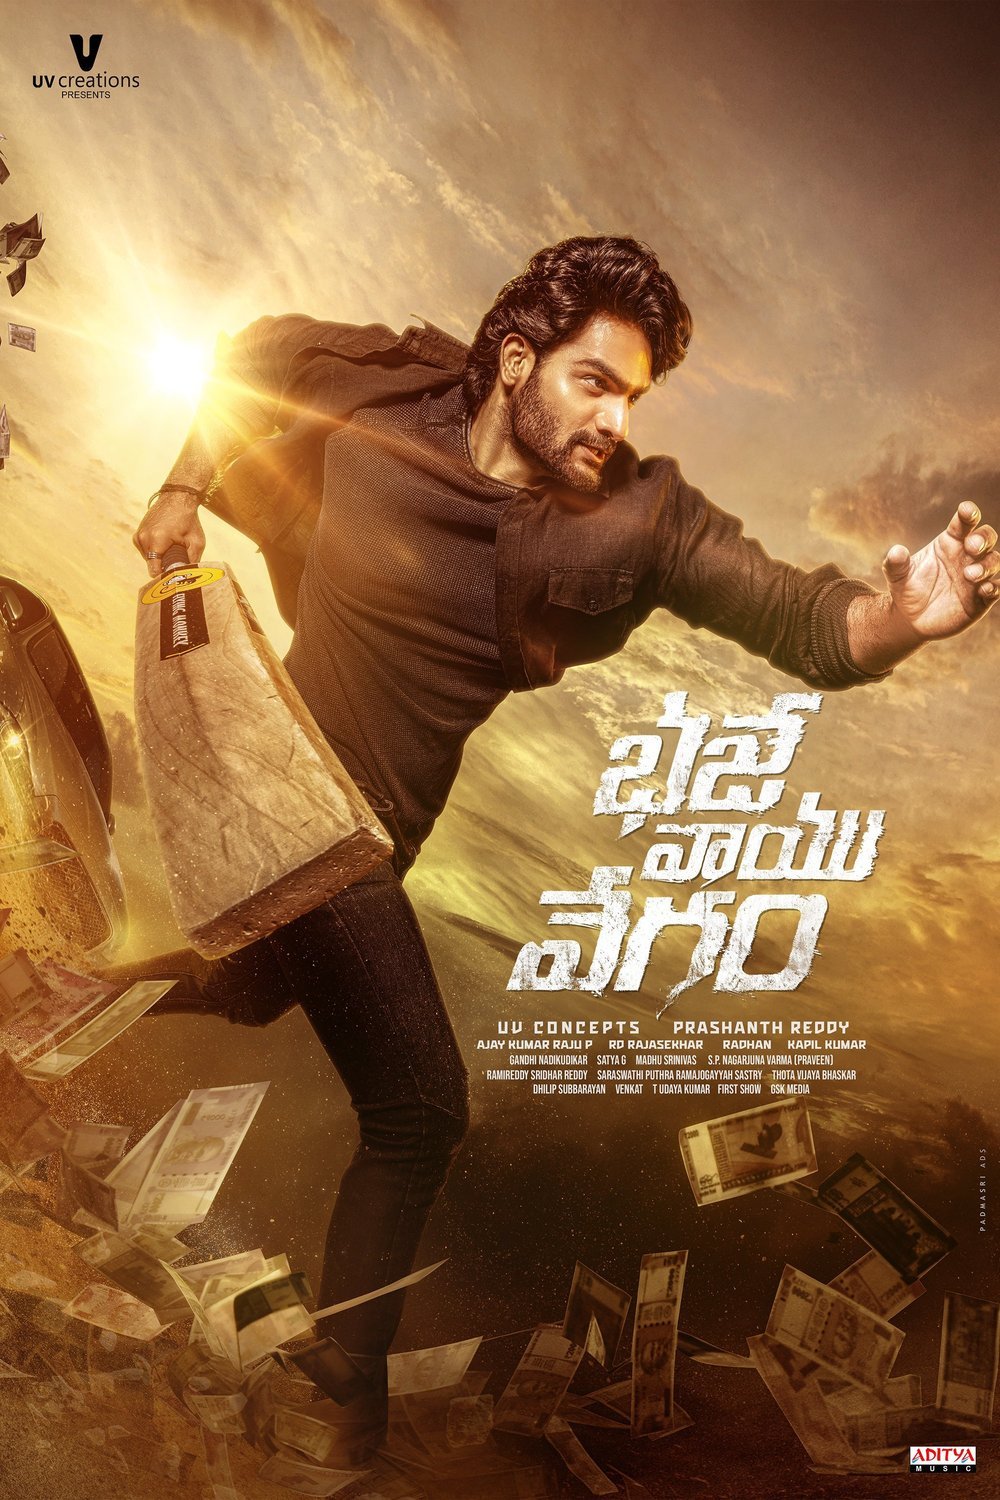 Telugu poster of the movie Bhaje Vaayu Vegam